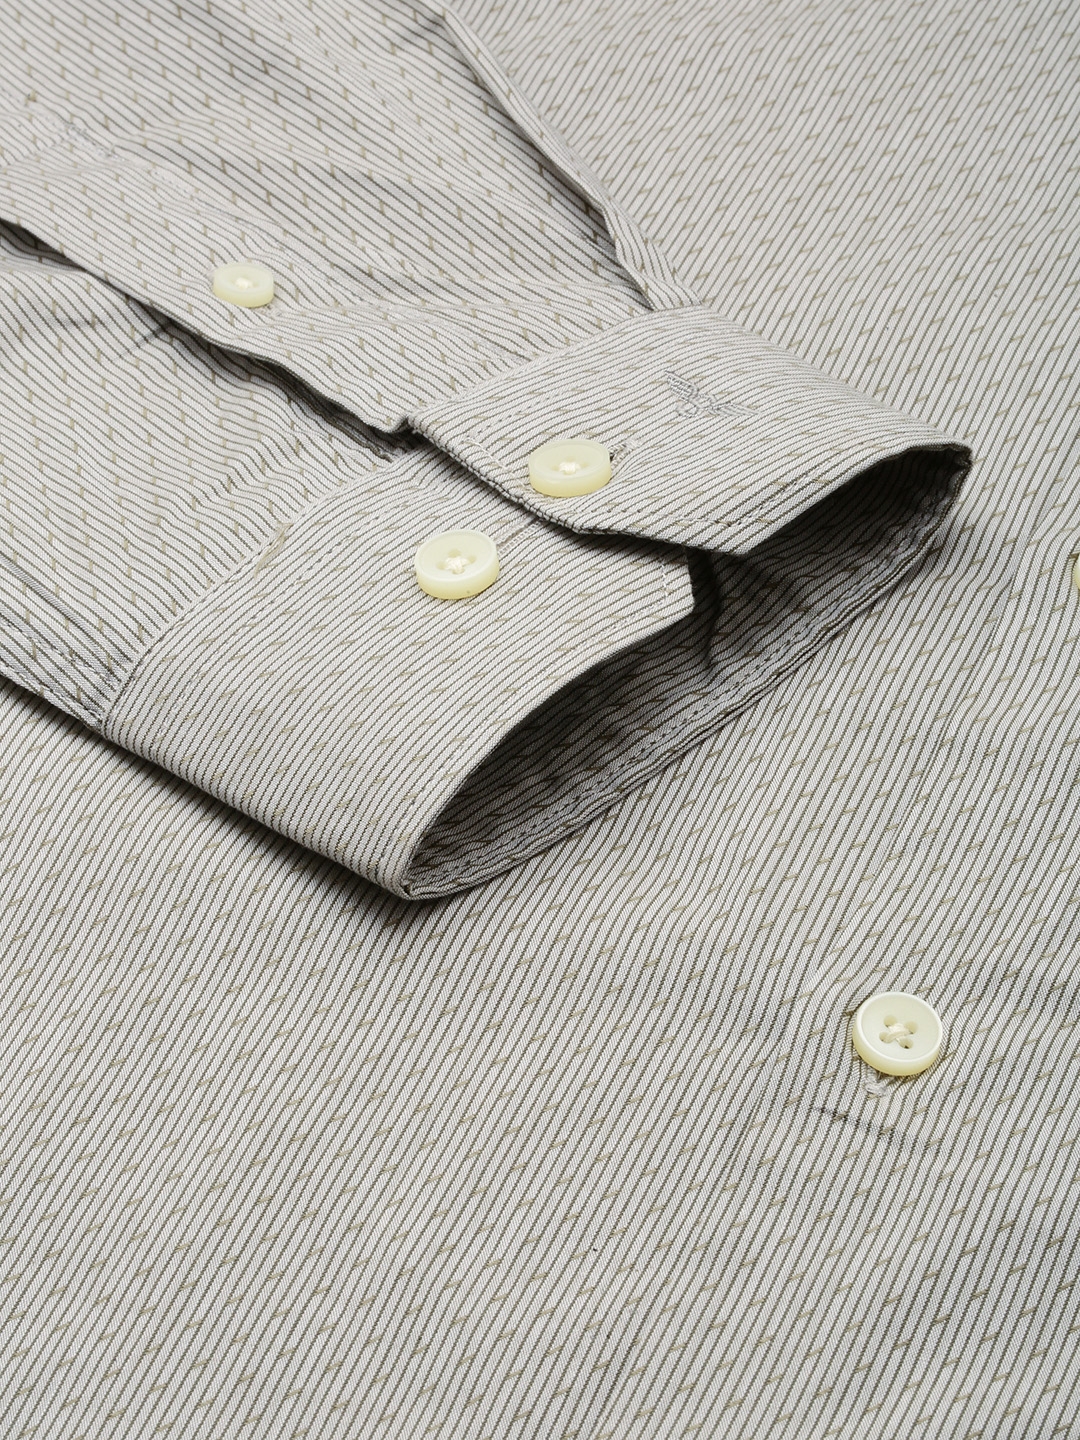 Showoff | SHOWOFF Men's Spread Collar Olive Striped Shirt 6